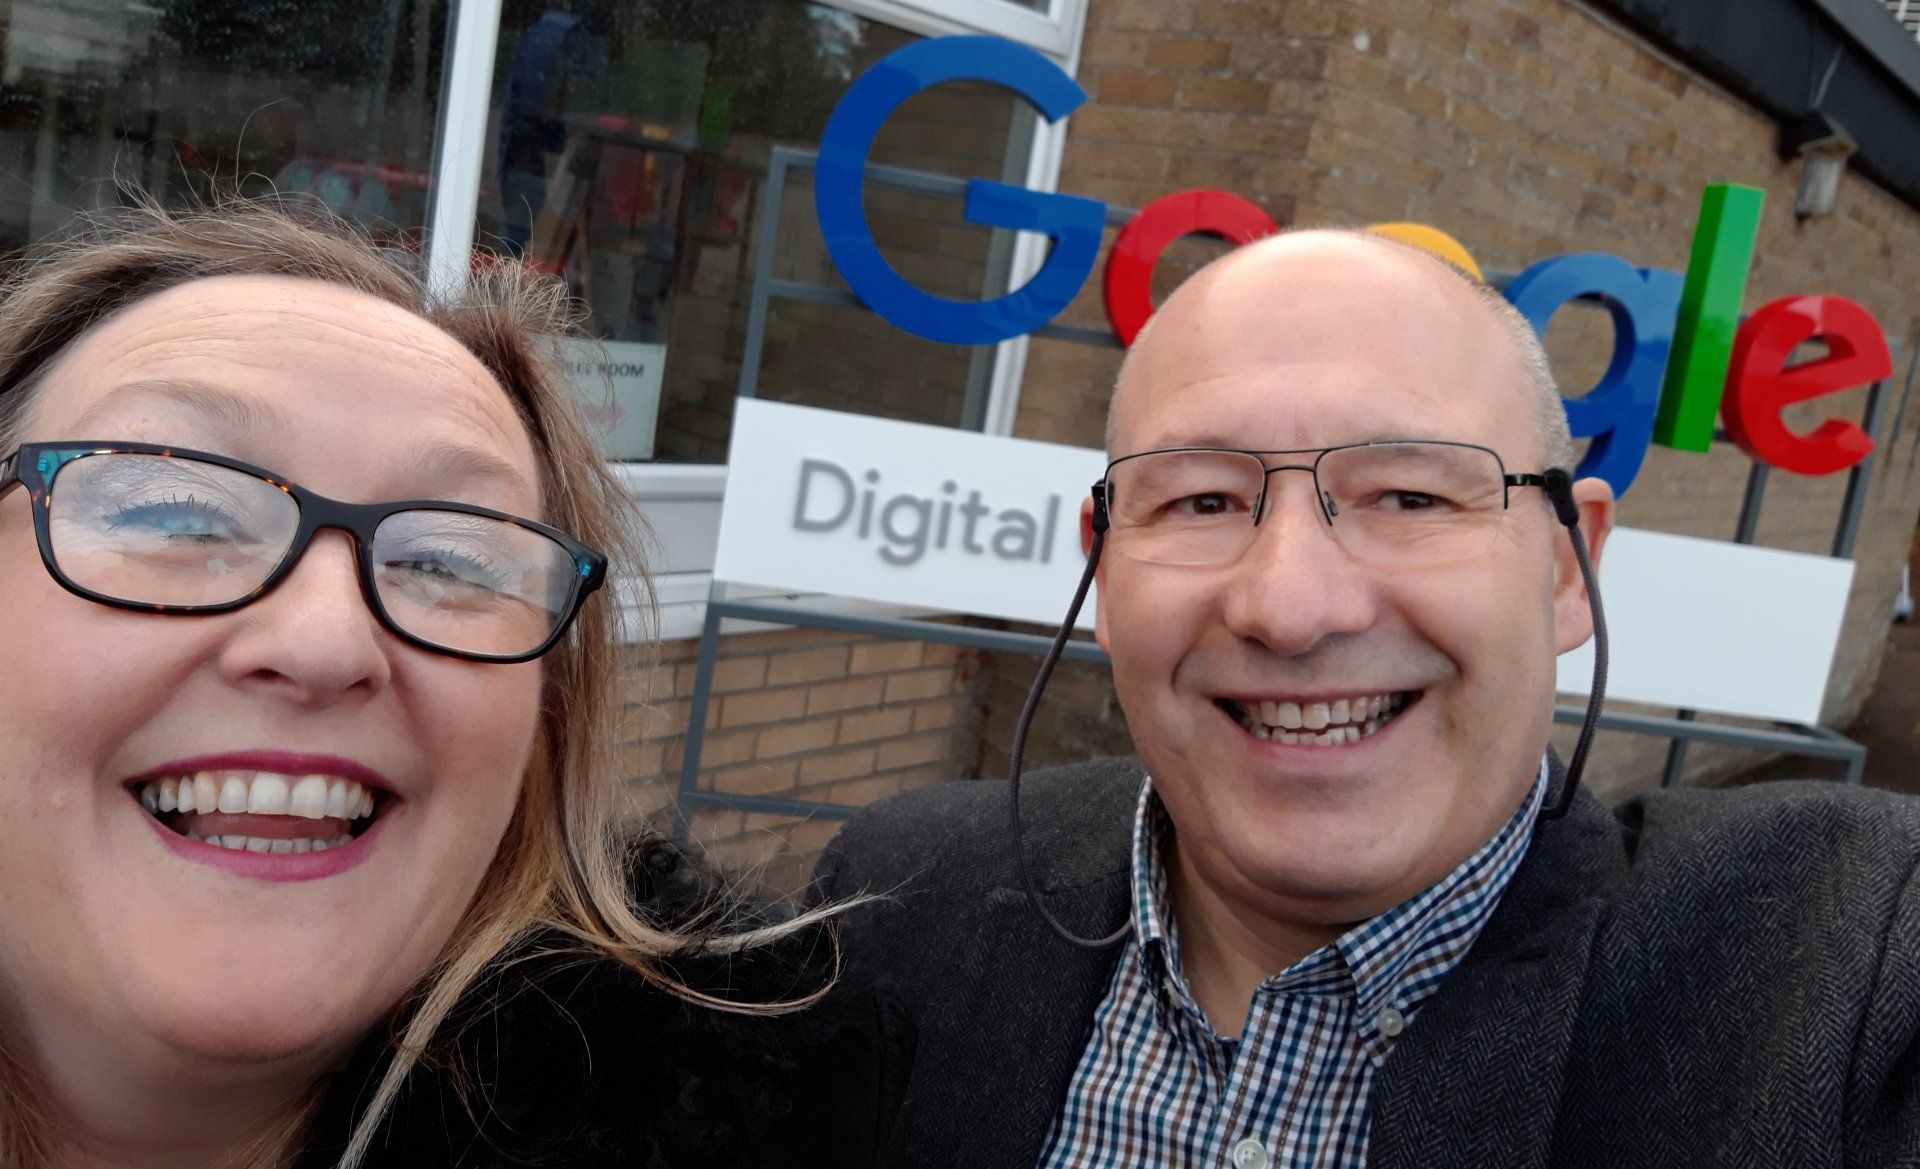 Maria McNevin and Peter Eyles visit the Google Digital Garage Training Event in North Walsham